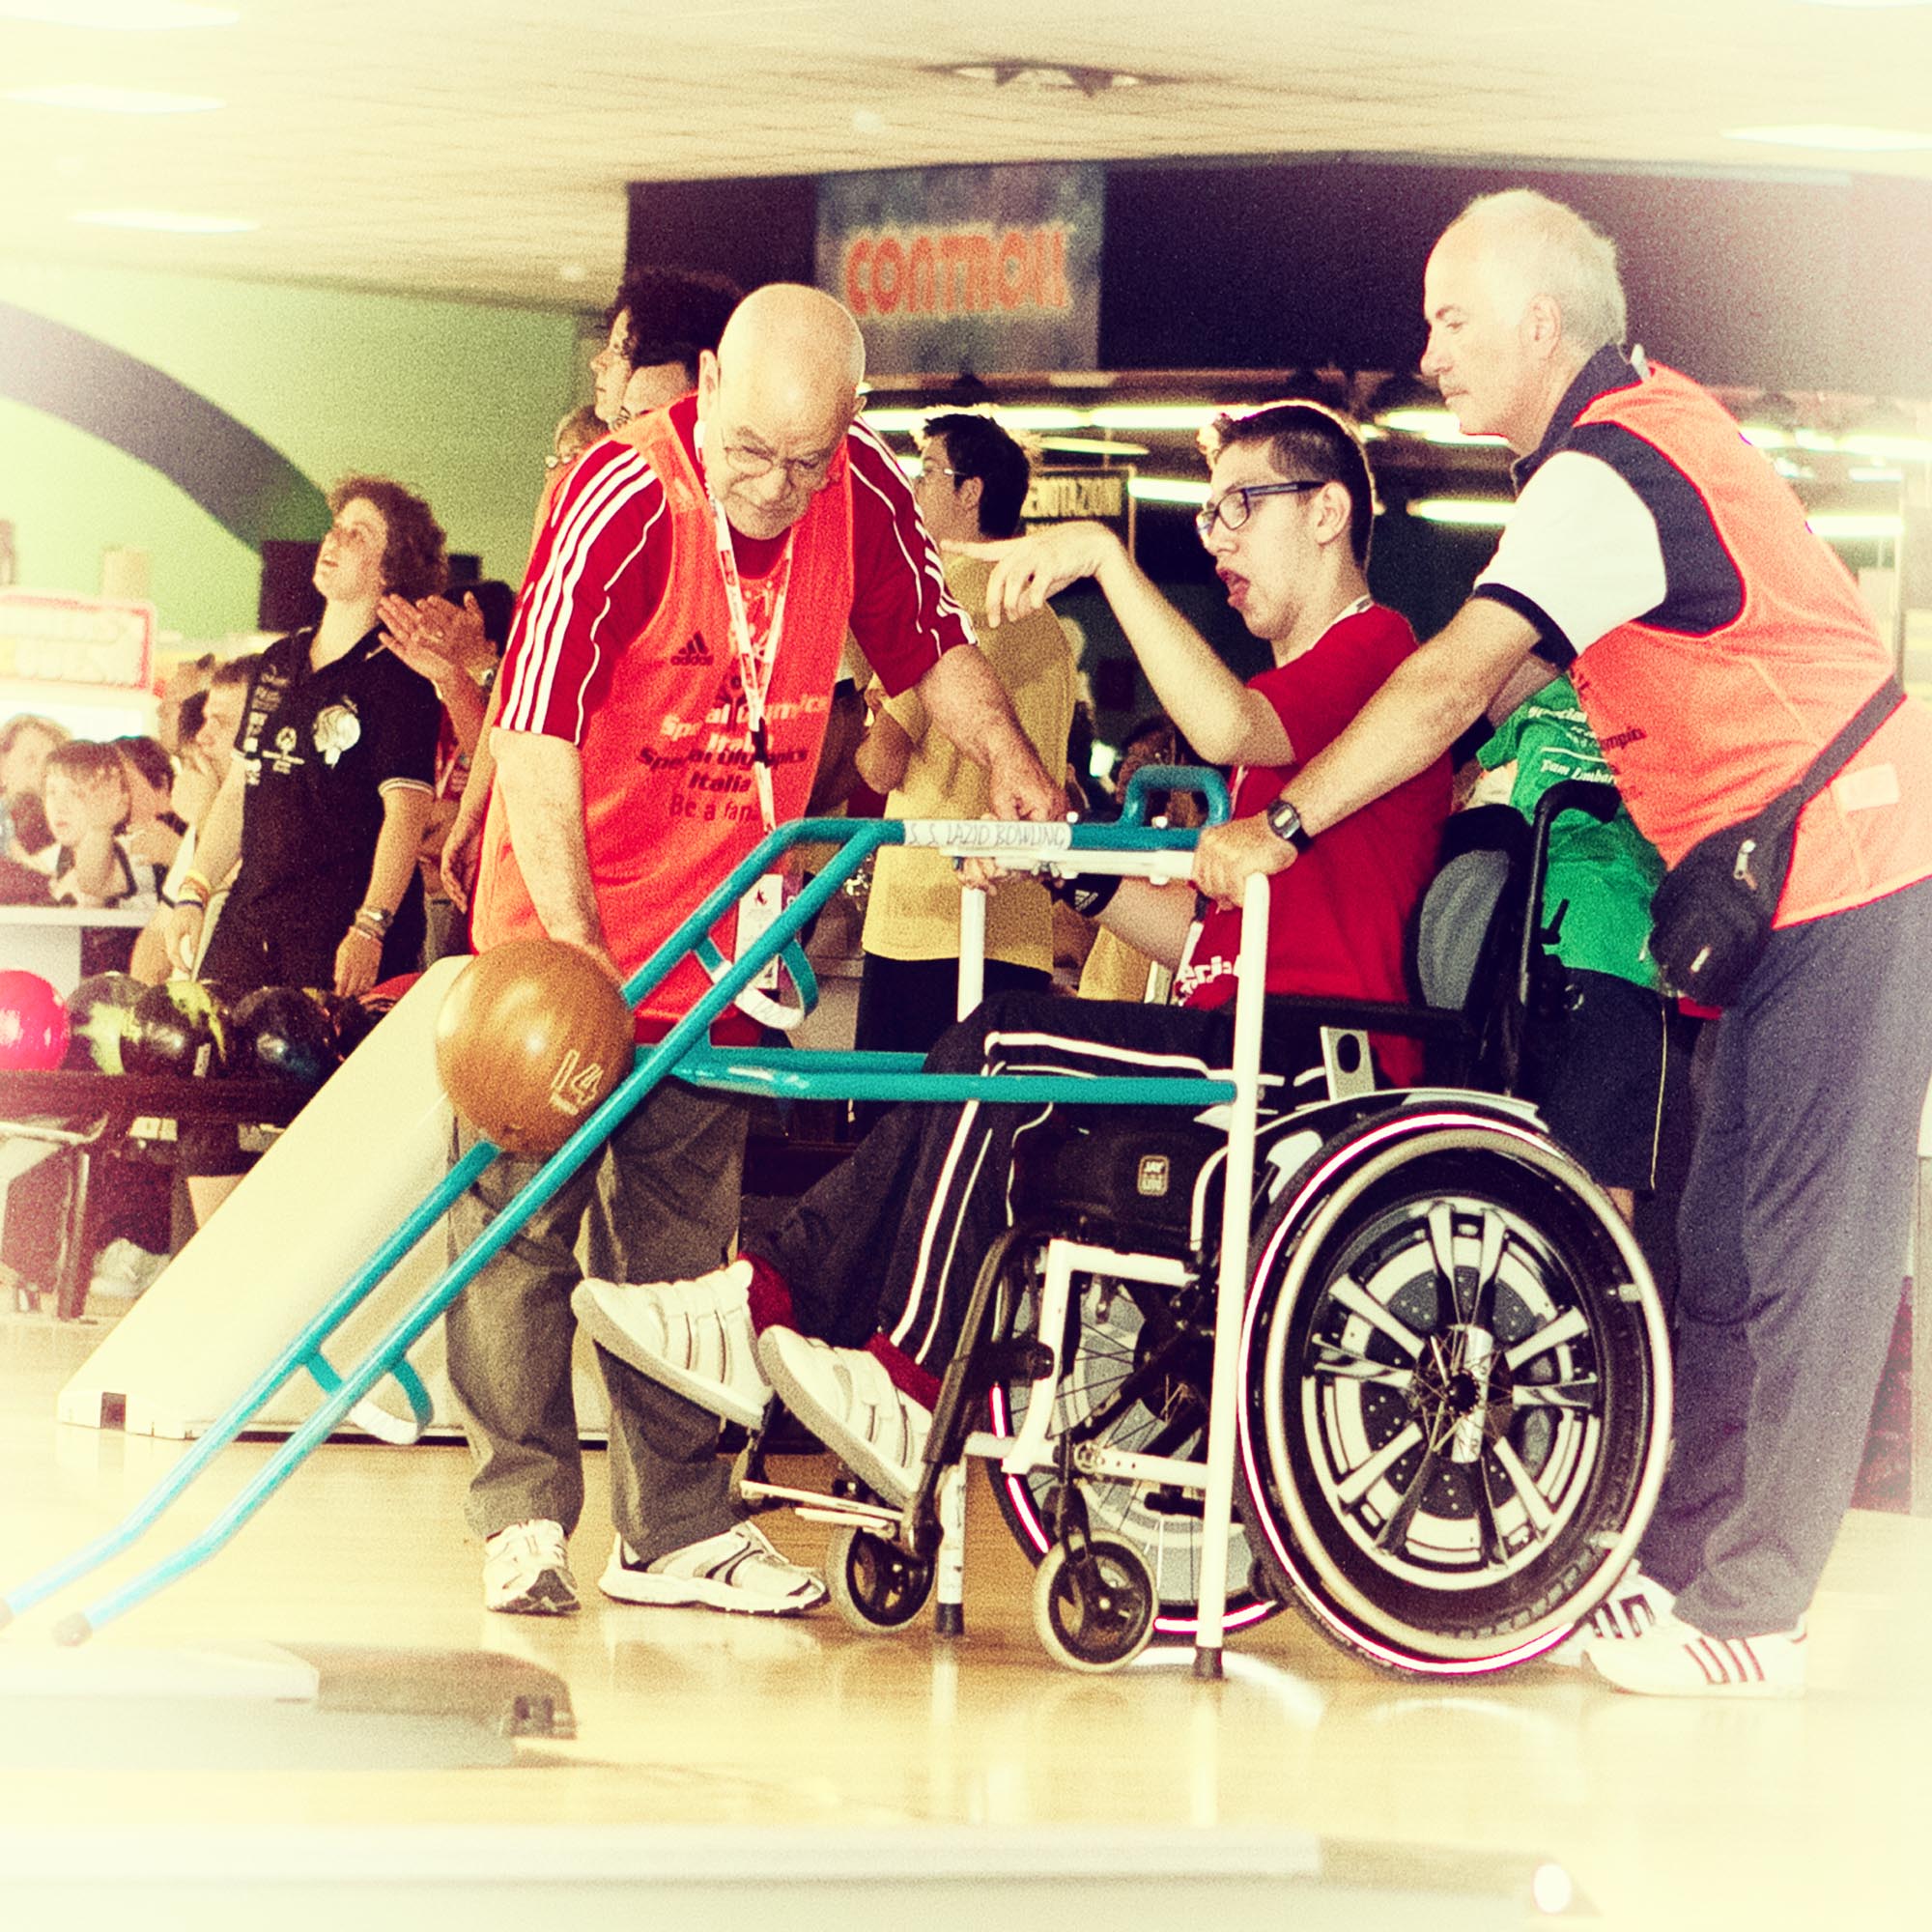 0332S sport lombardia03 - Assistenza disabili, una serata al bowling